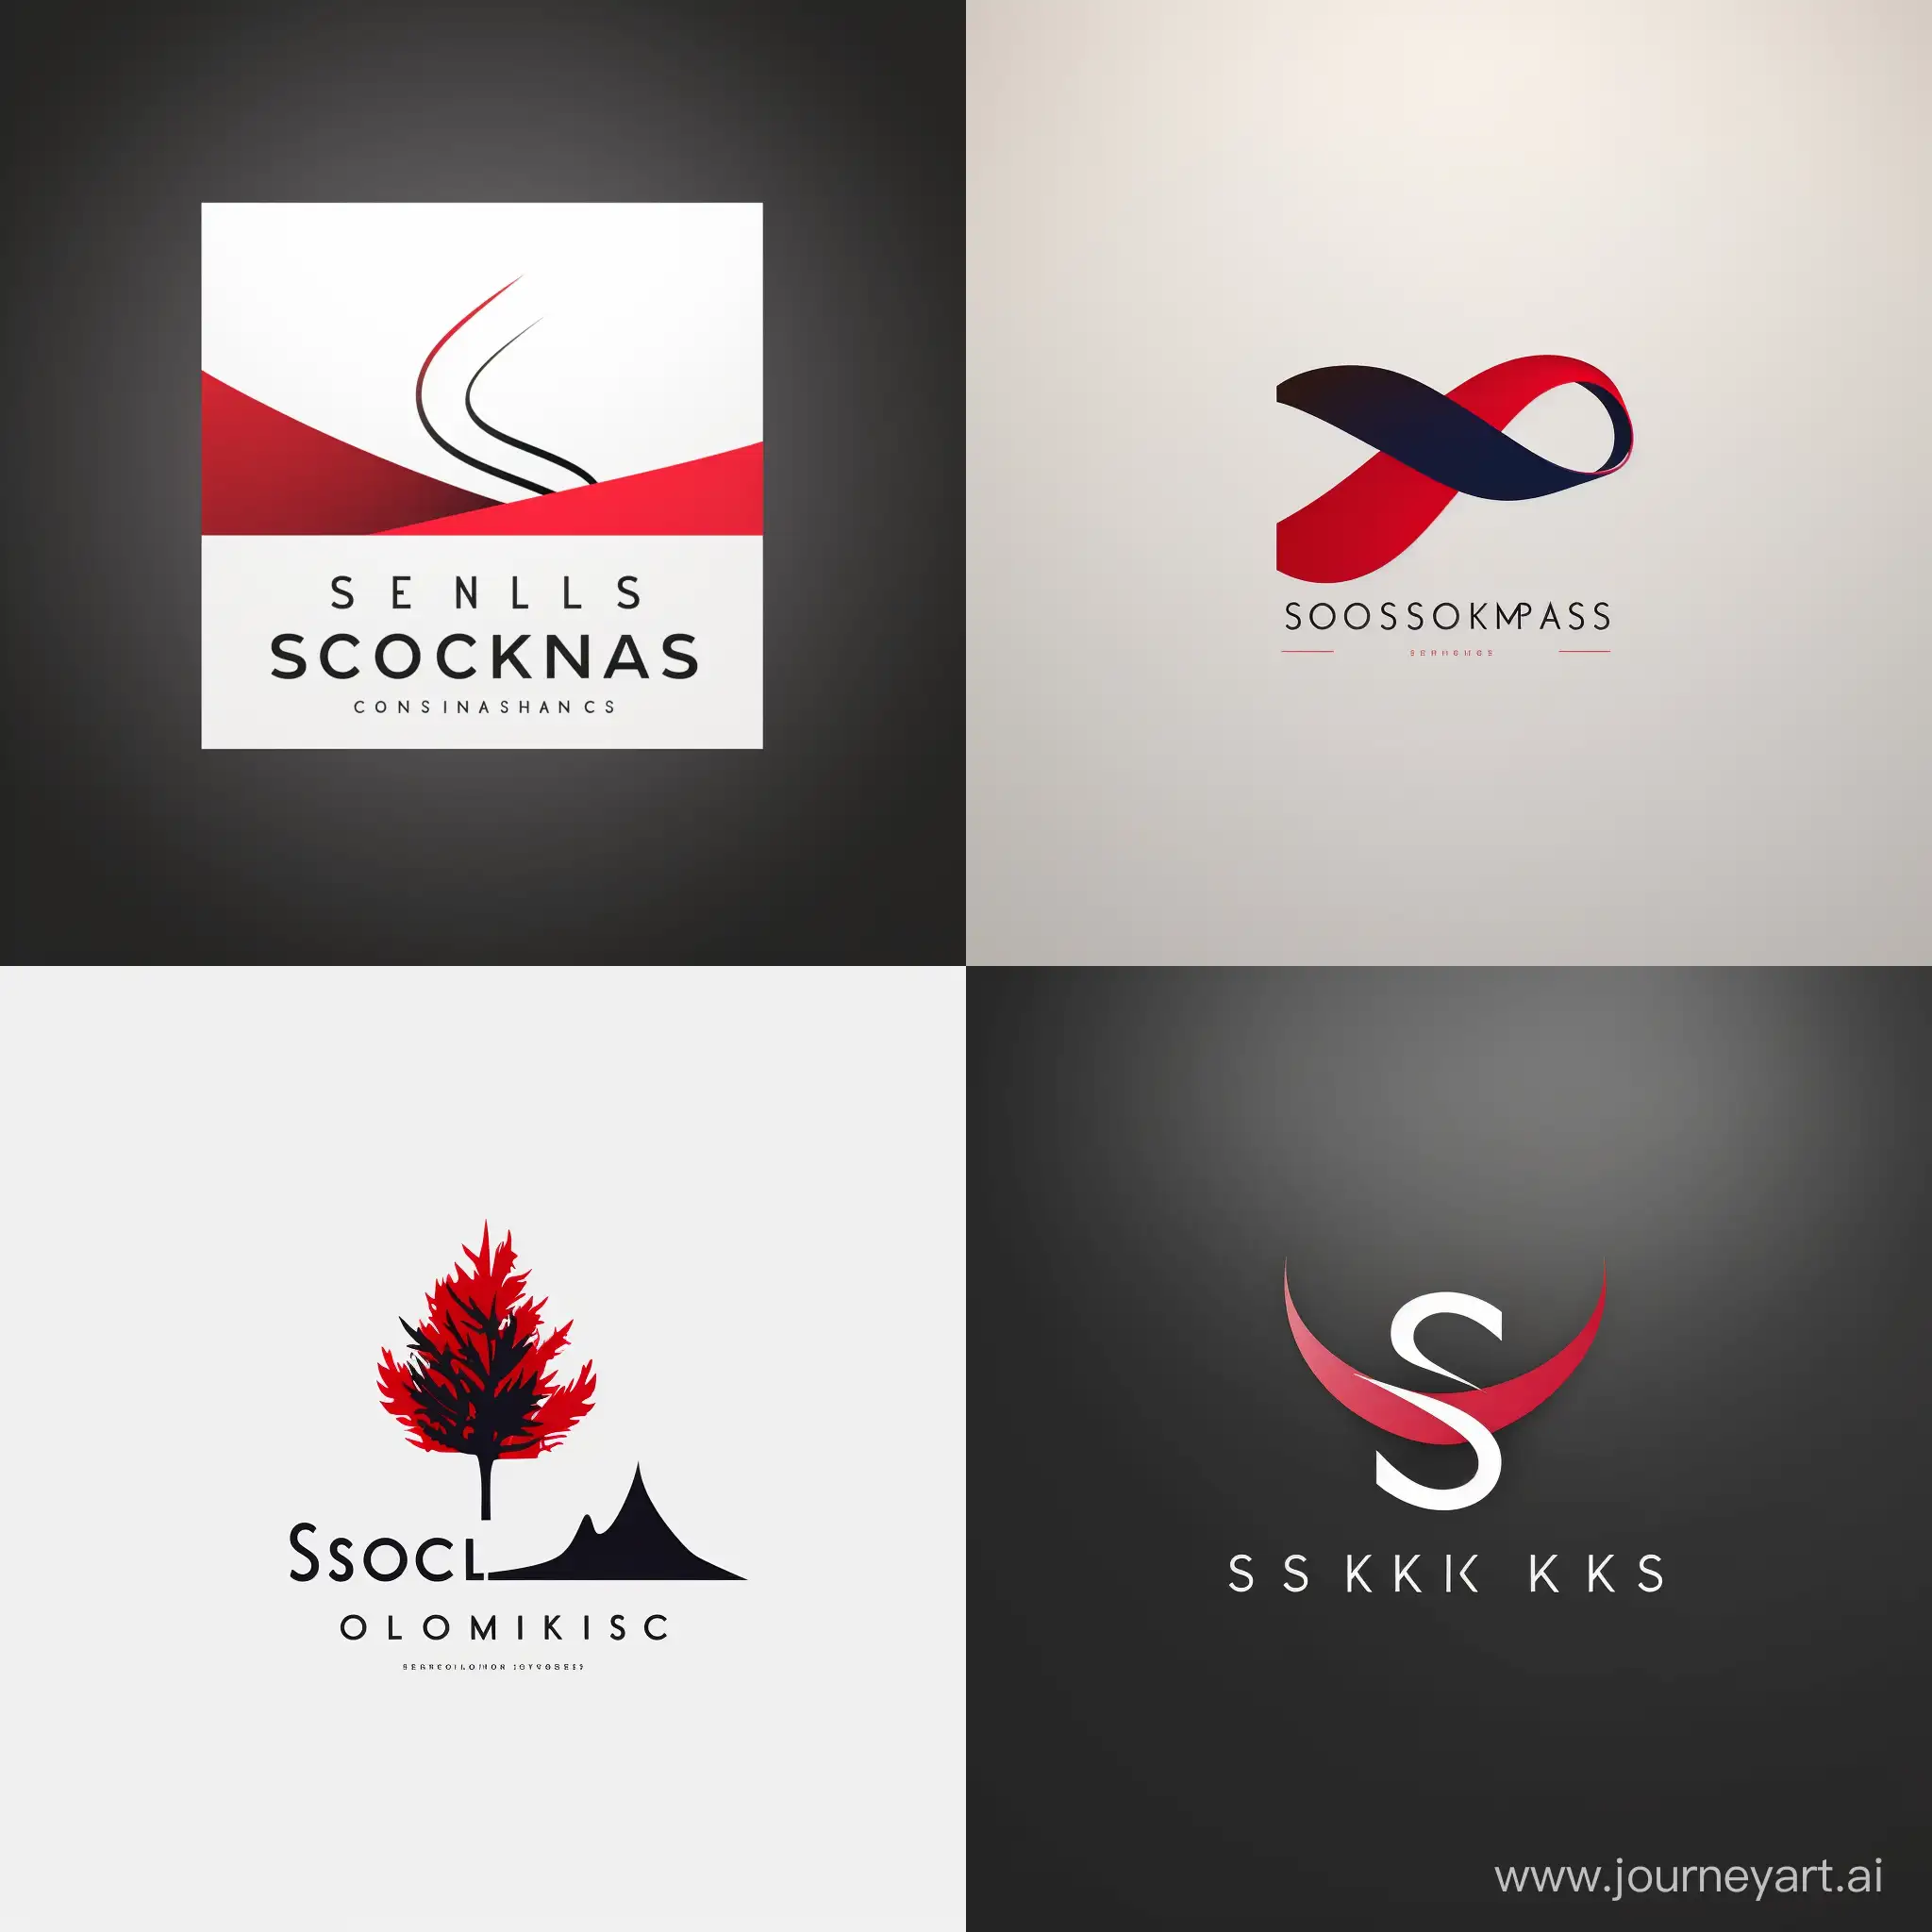 Design logo for marketing agency named: "scoreminds". Use colors: red, black, white. Flat minimalistic design.